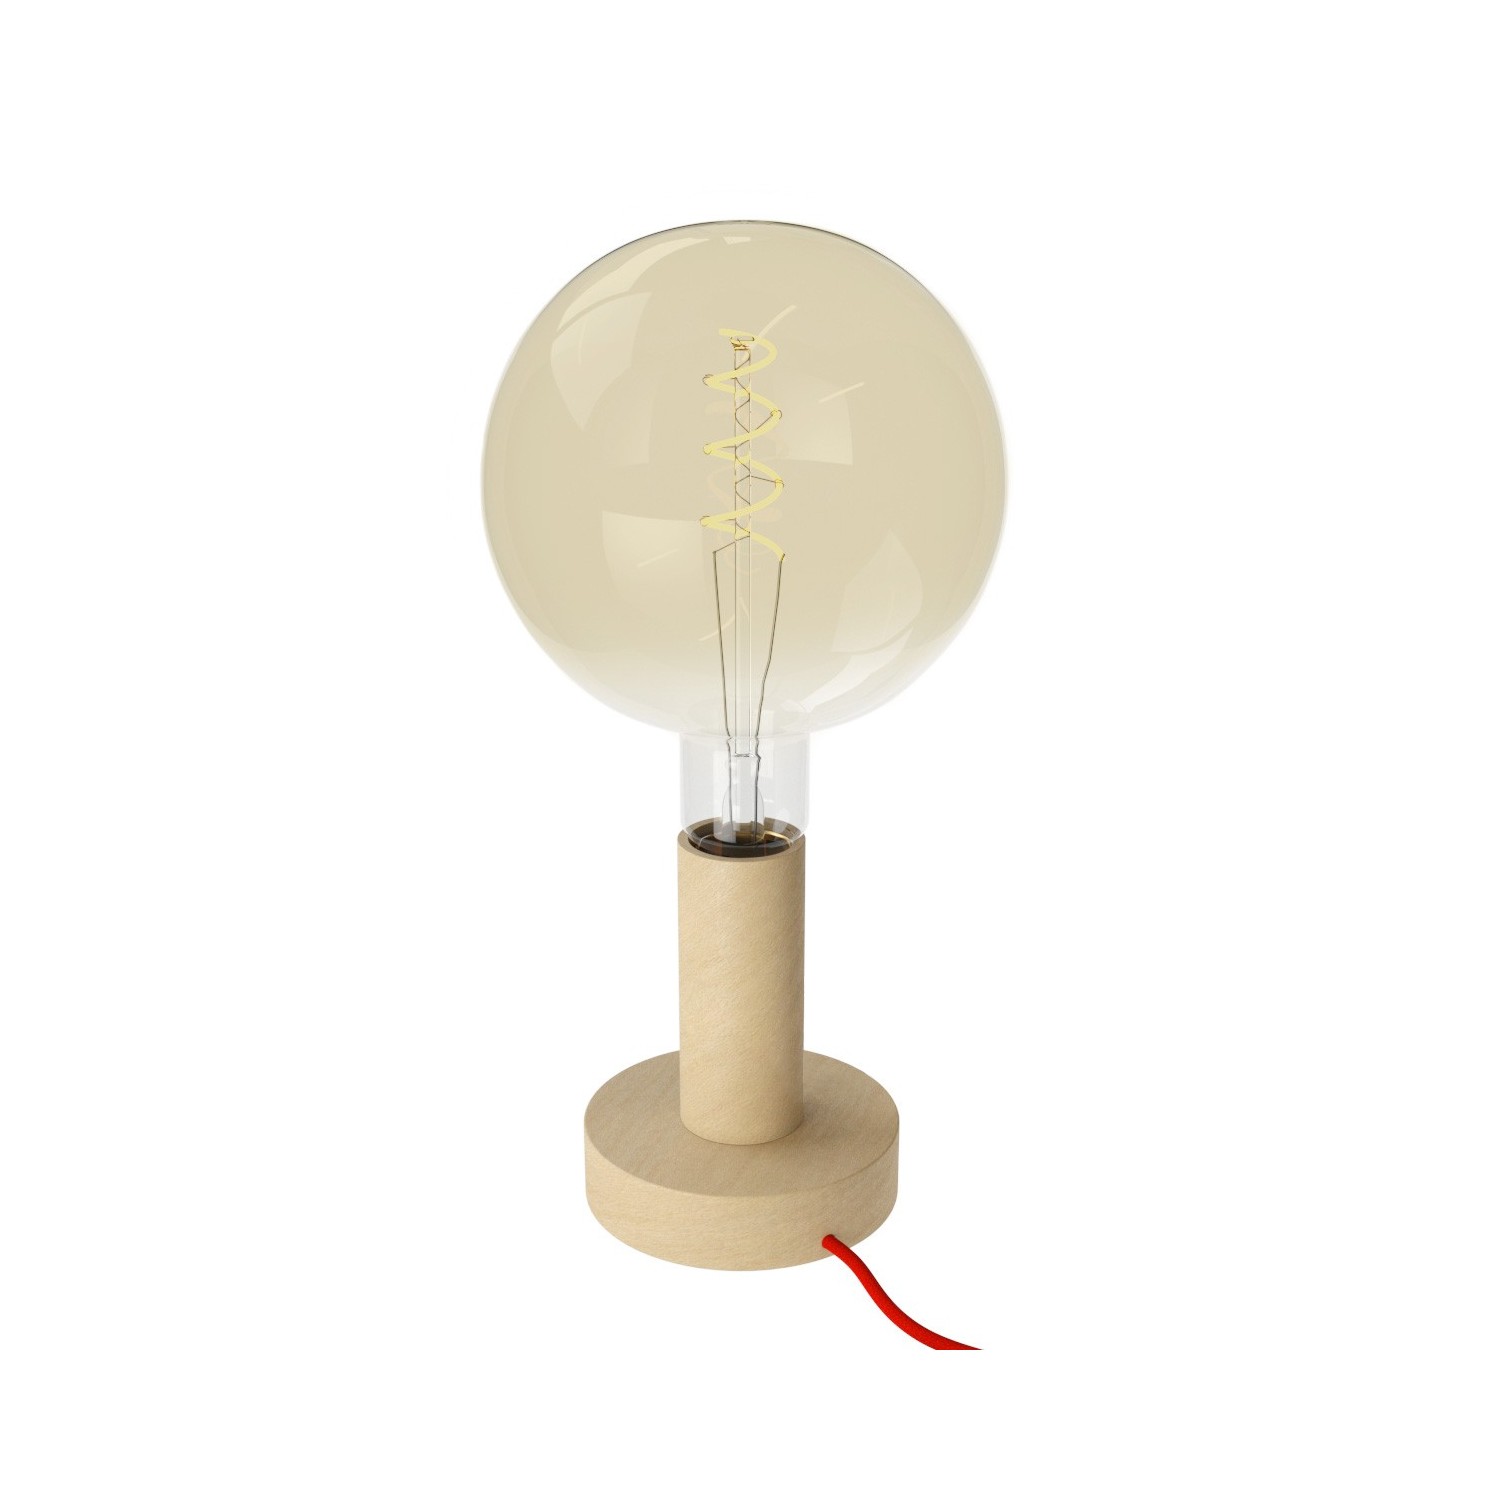 Posaluce Wood M, lámpara de mesa de madera con cable textil, interruptor y clavija